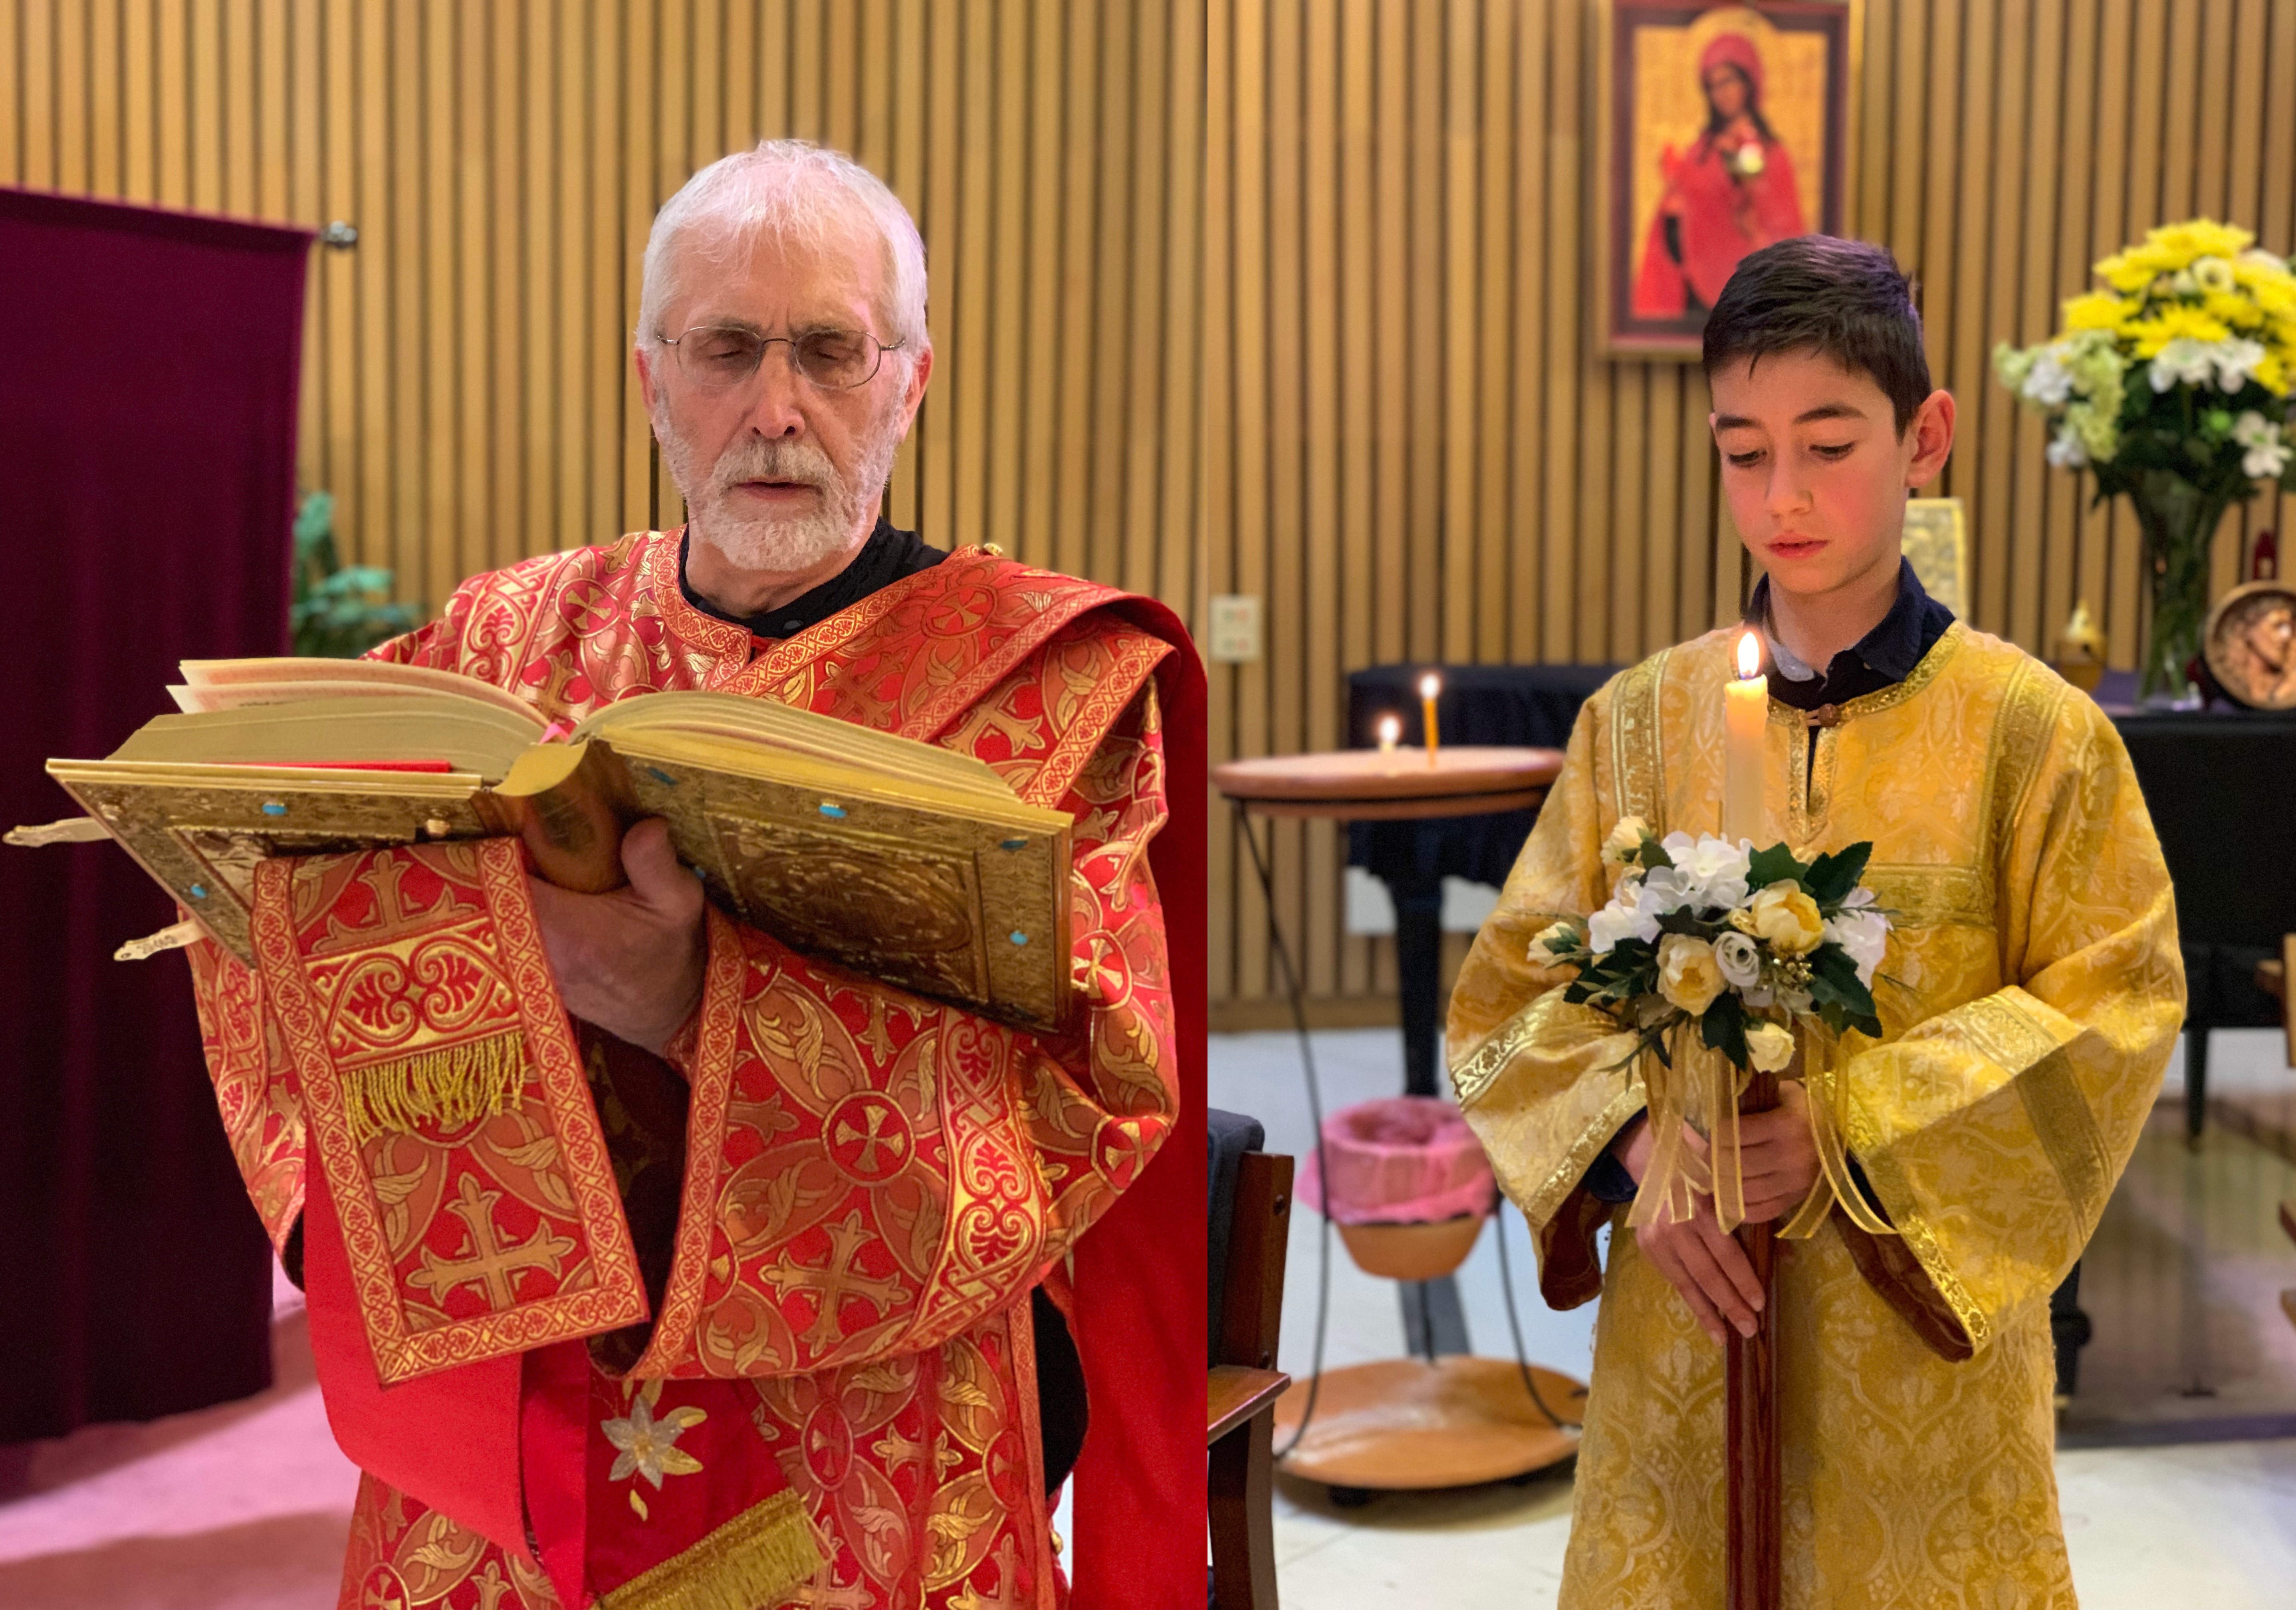 Deacon Nicholas and an altar boy serve during Divine LIturgy